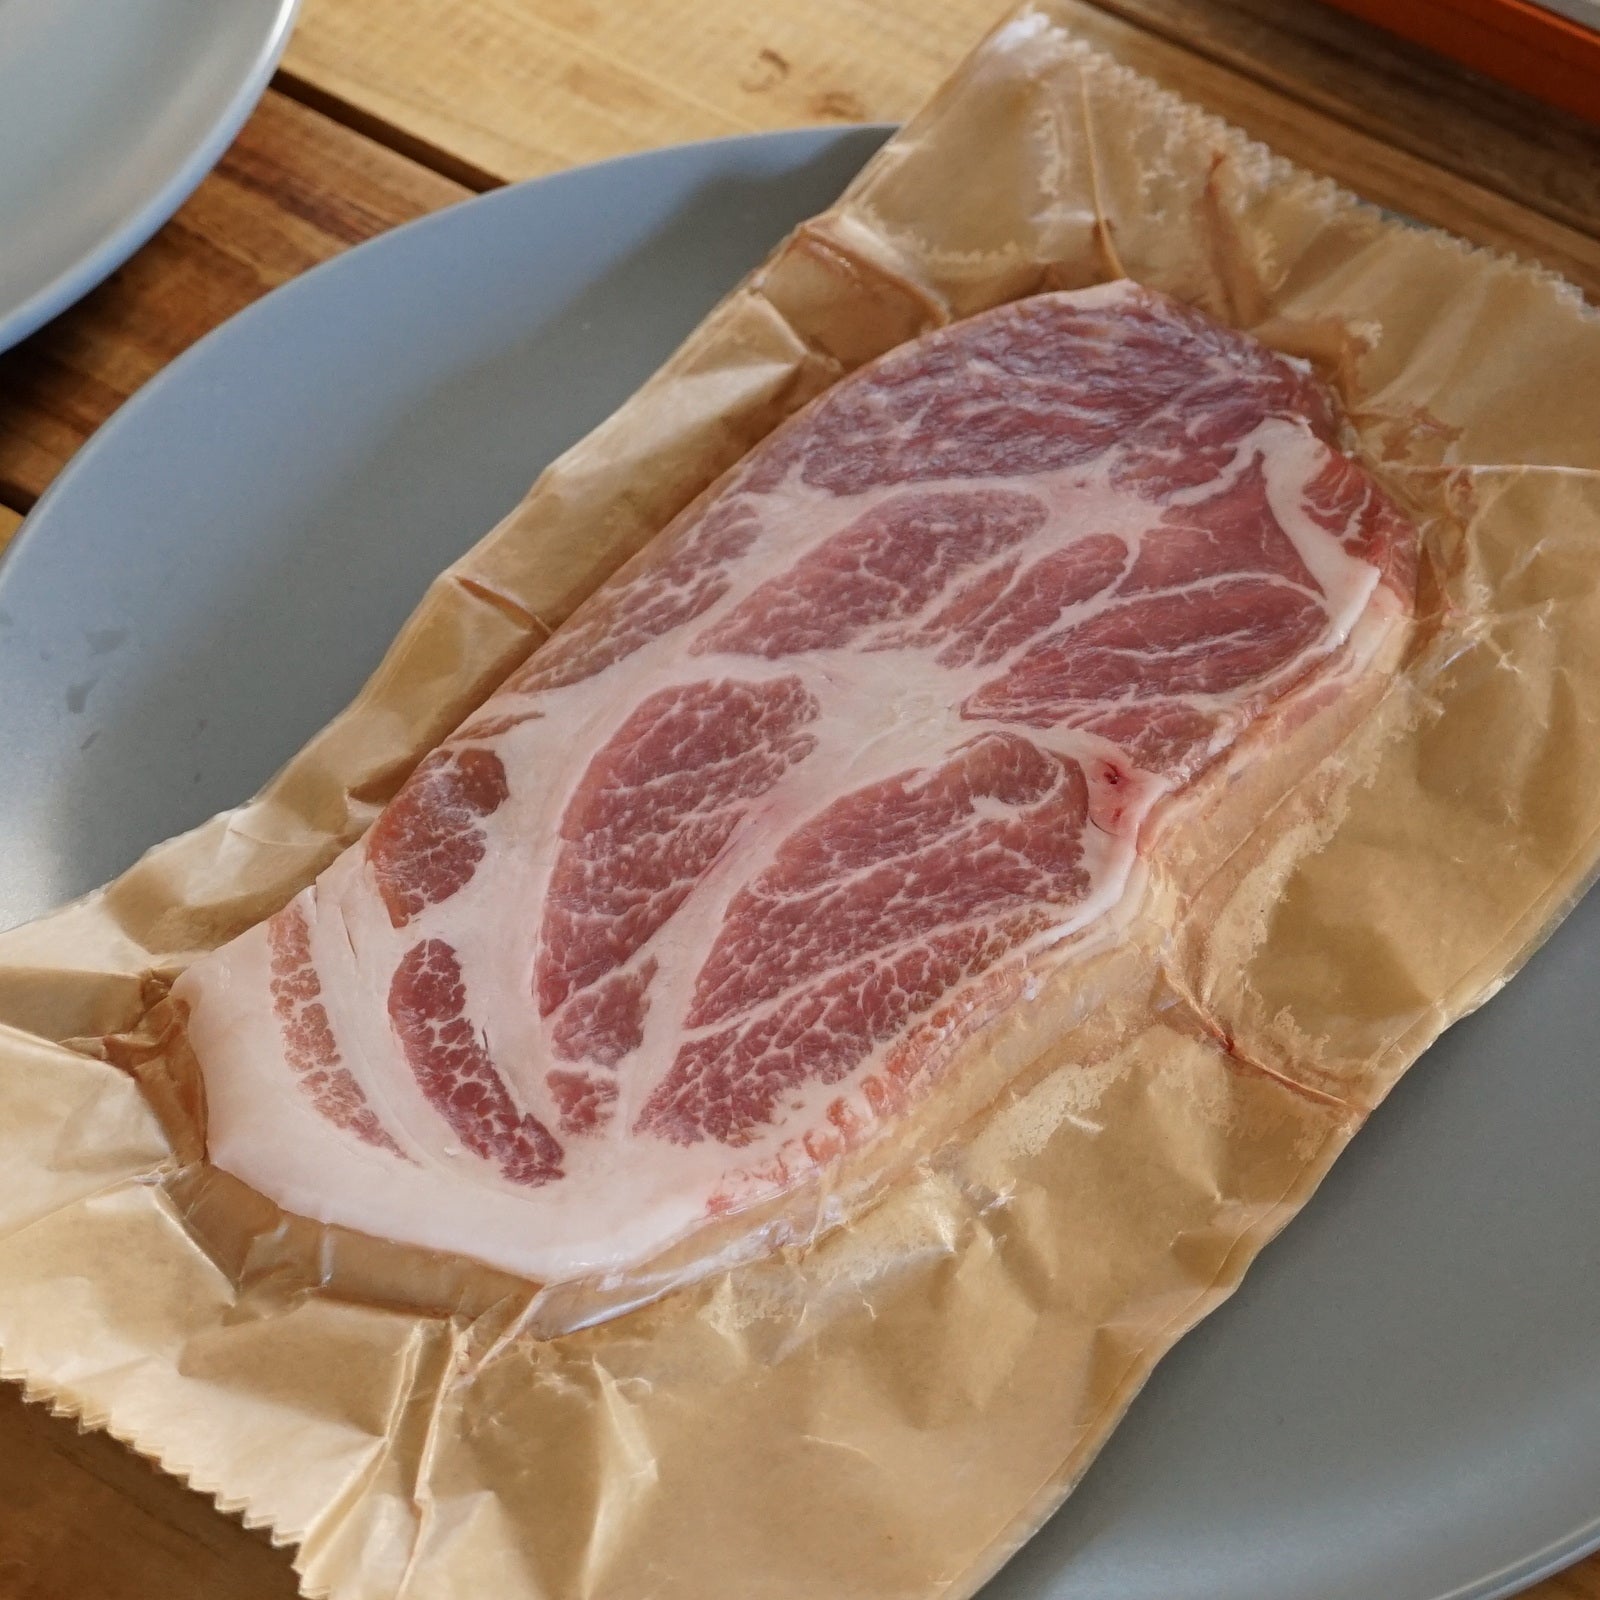 Free-Range Pork Shoulder Slices for Shabu Shabu (300g) - Horizon Farms